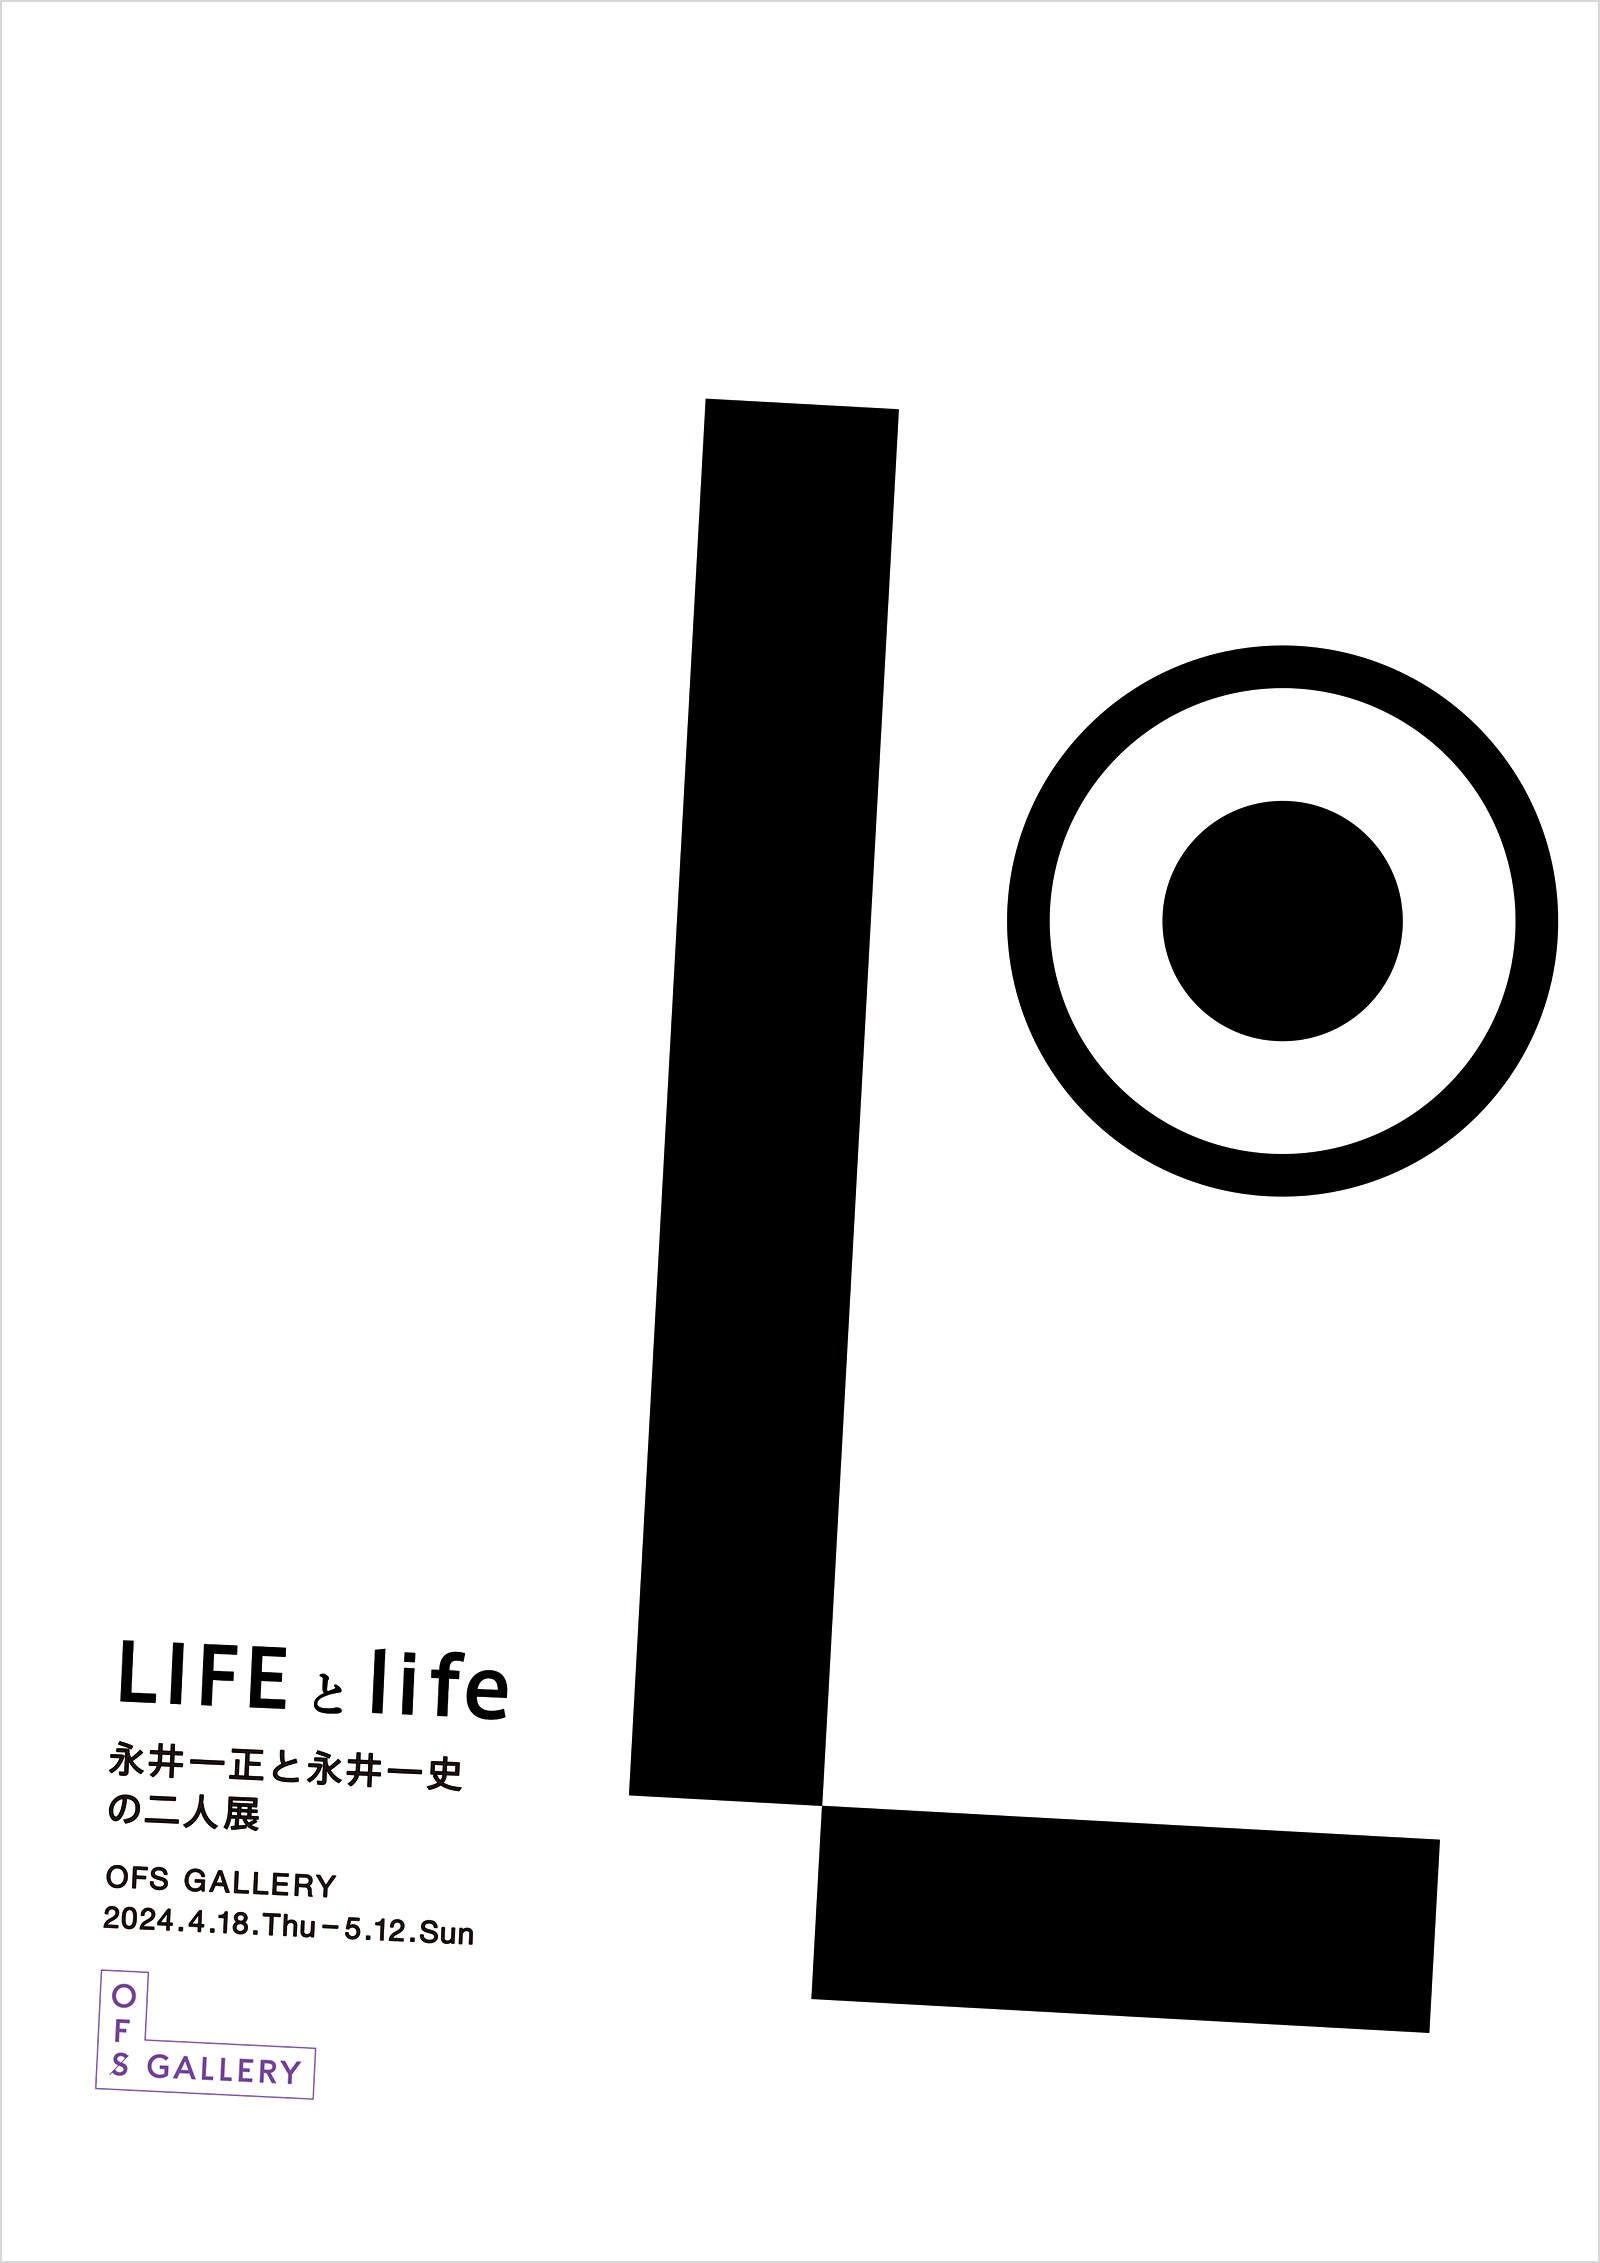 「 LIFE と life 」永井一正と永井一史の二人展